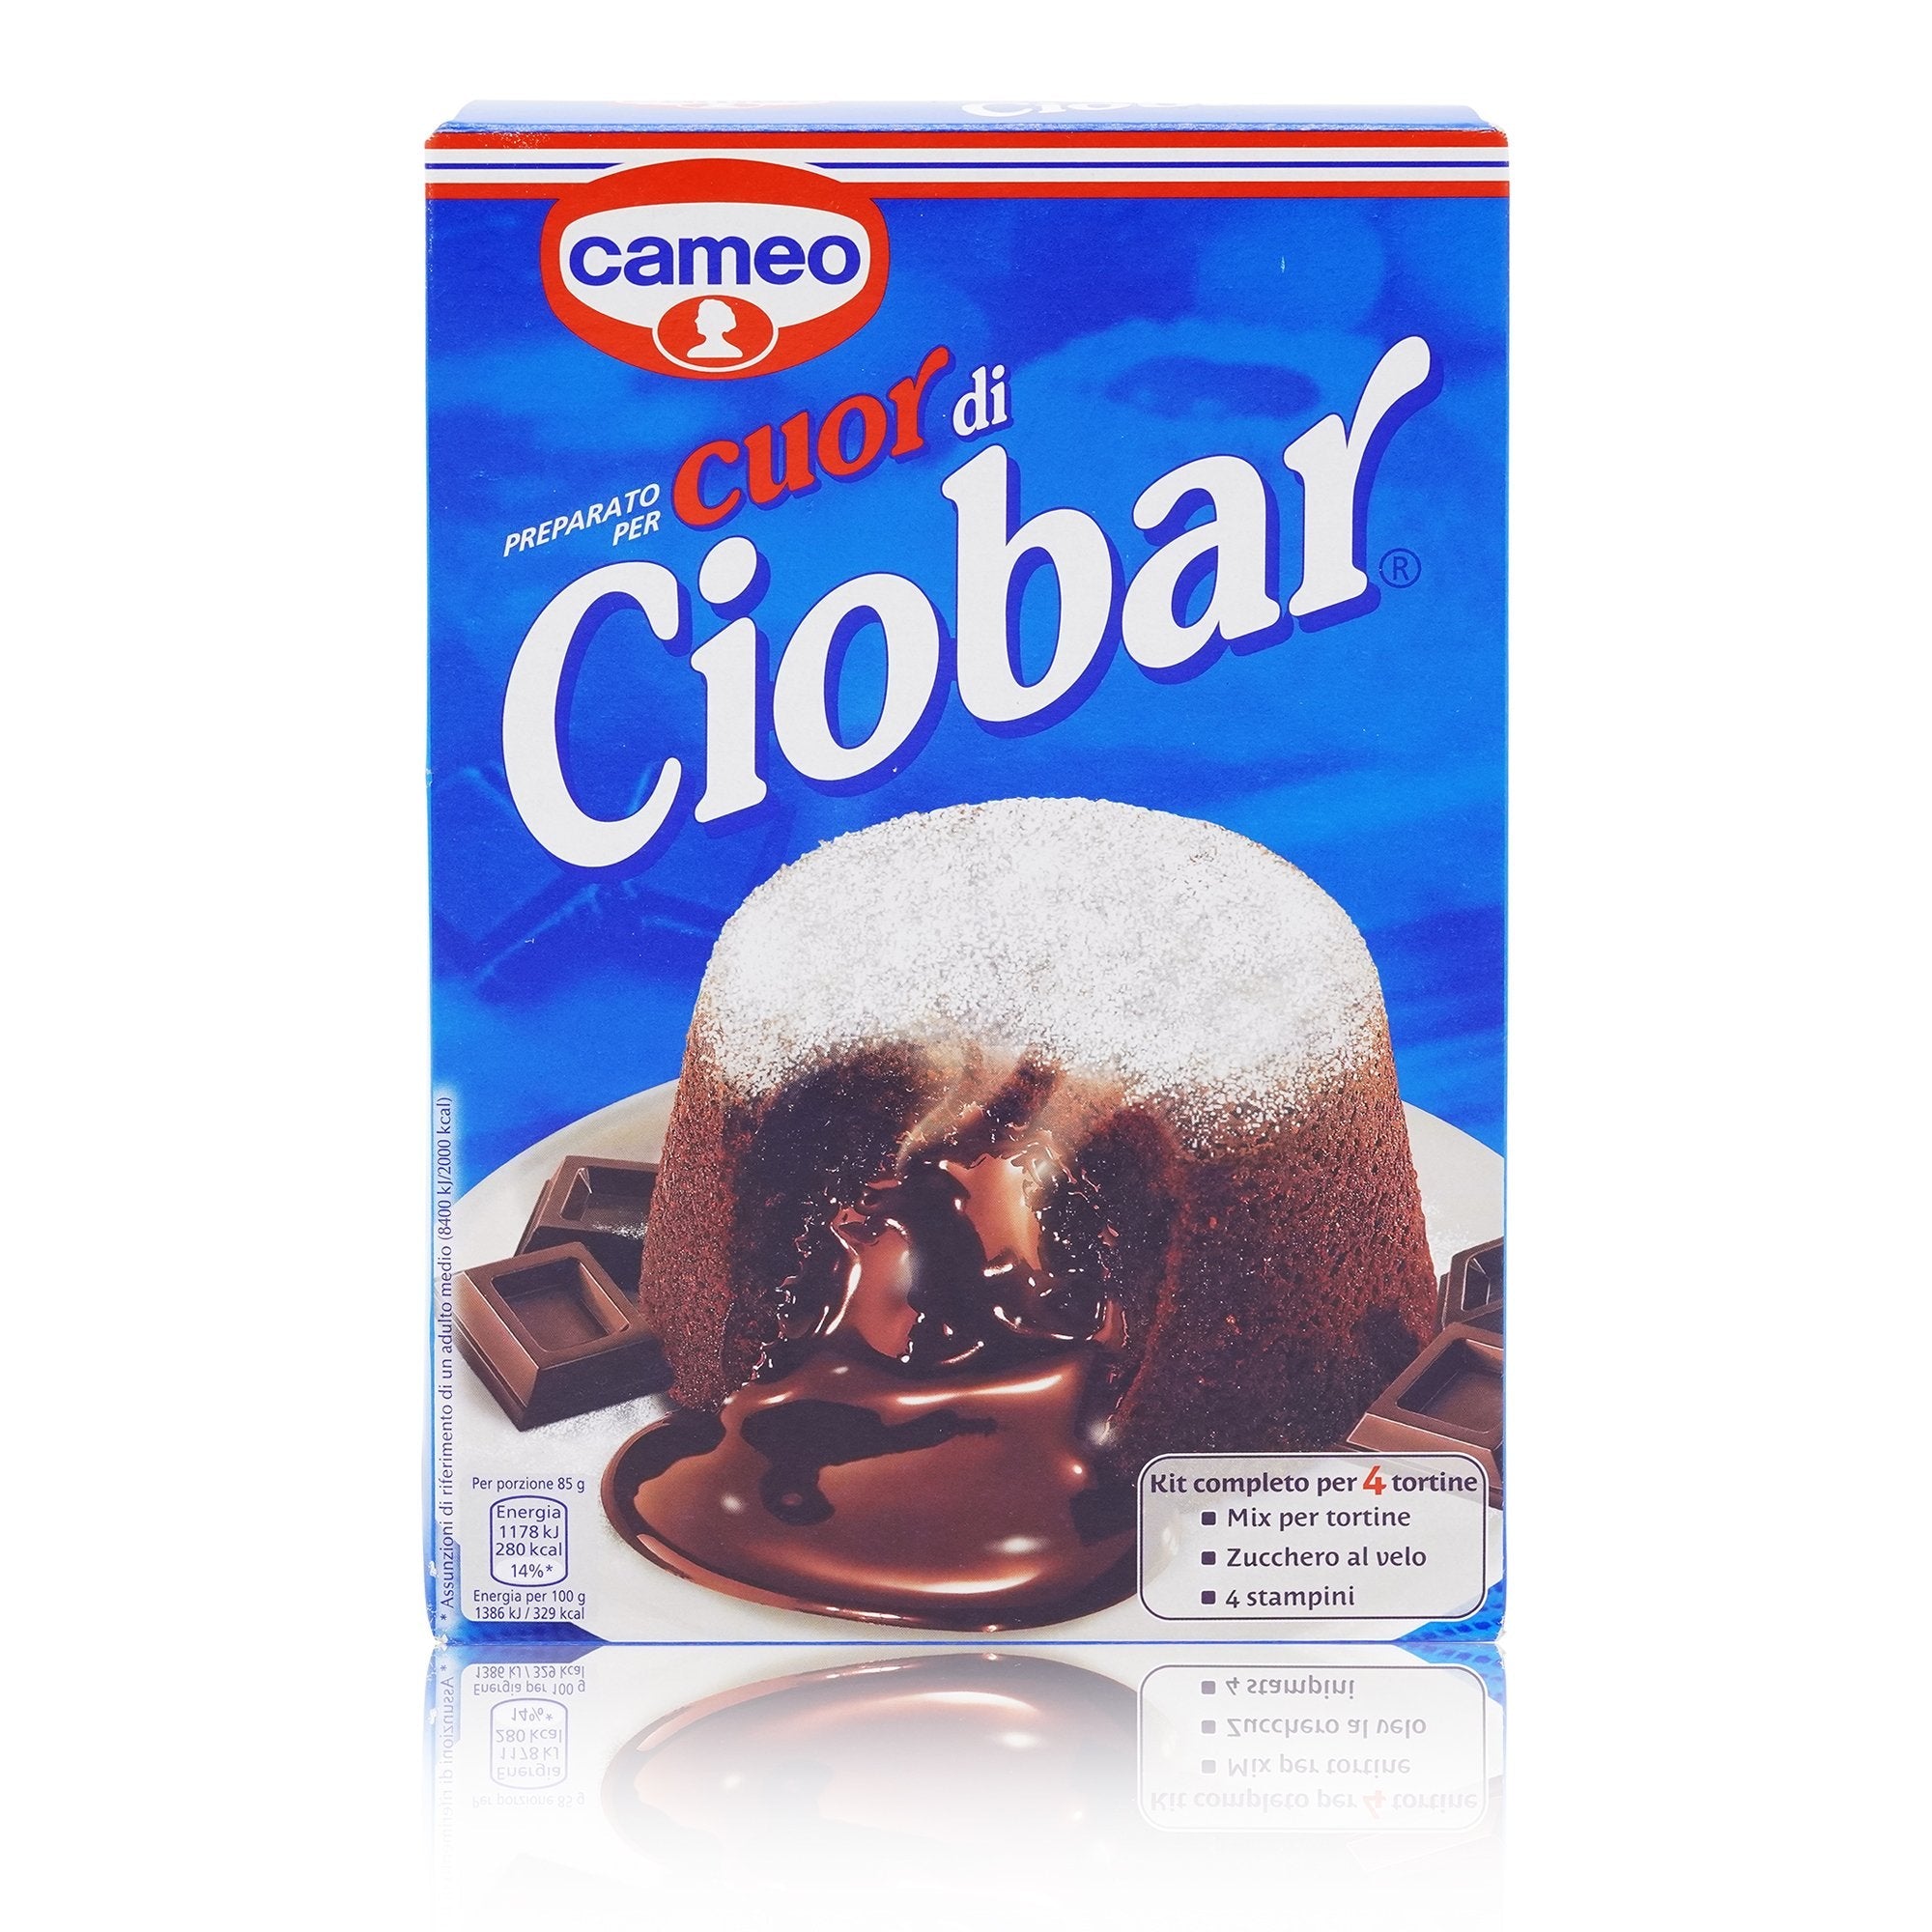 CAMEO Cuor di Ciobar – Backmischung Cuor di Ciobar - 0,233kg - italienisch-einkaufen.de